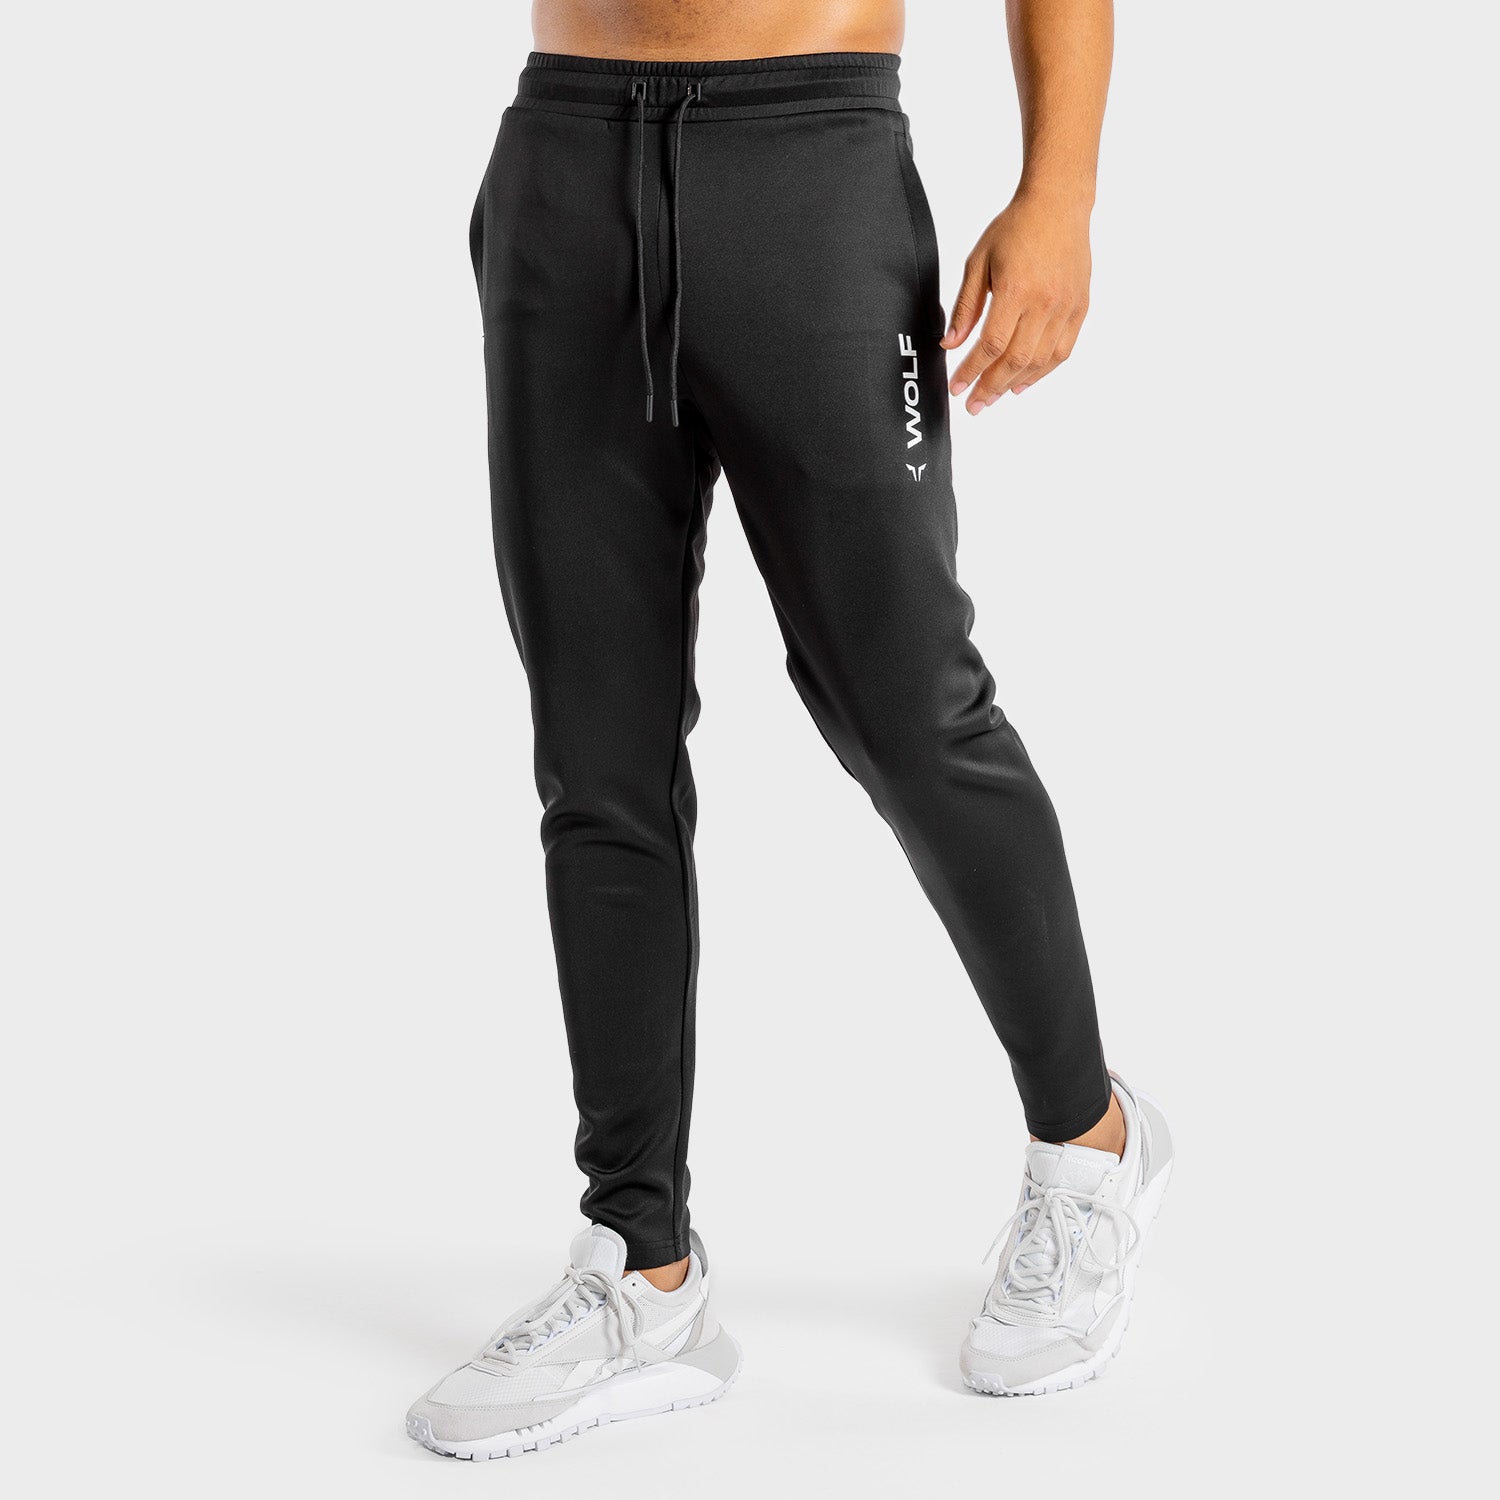 squatwolf-gym-wear-primal-joggers-men-black-workout-pants-for-men